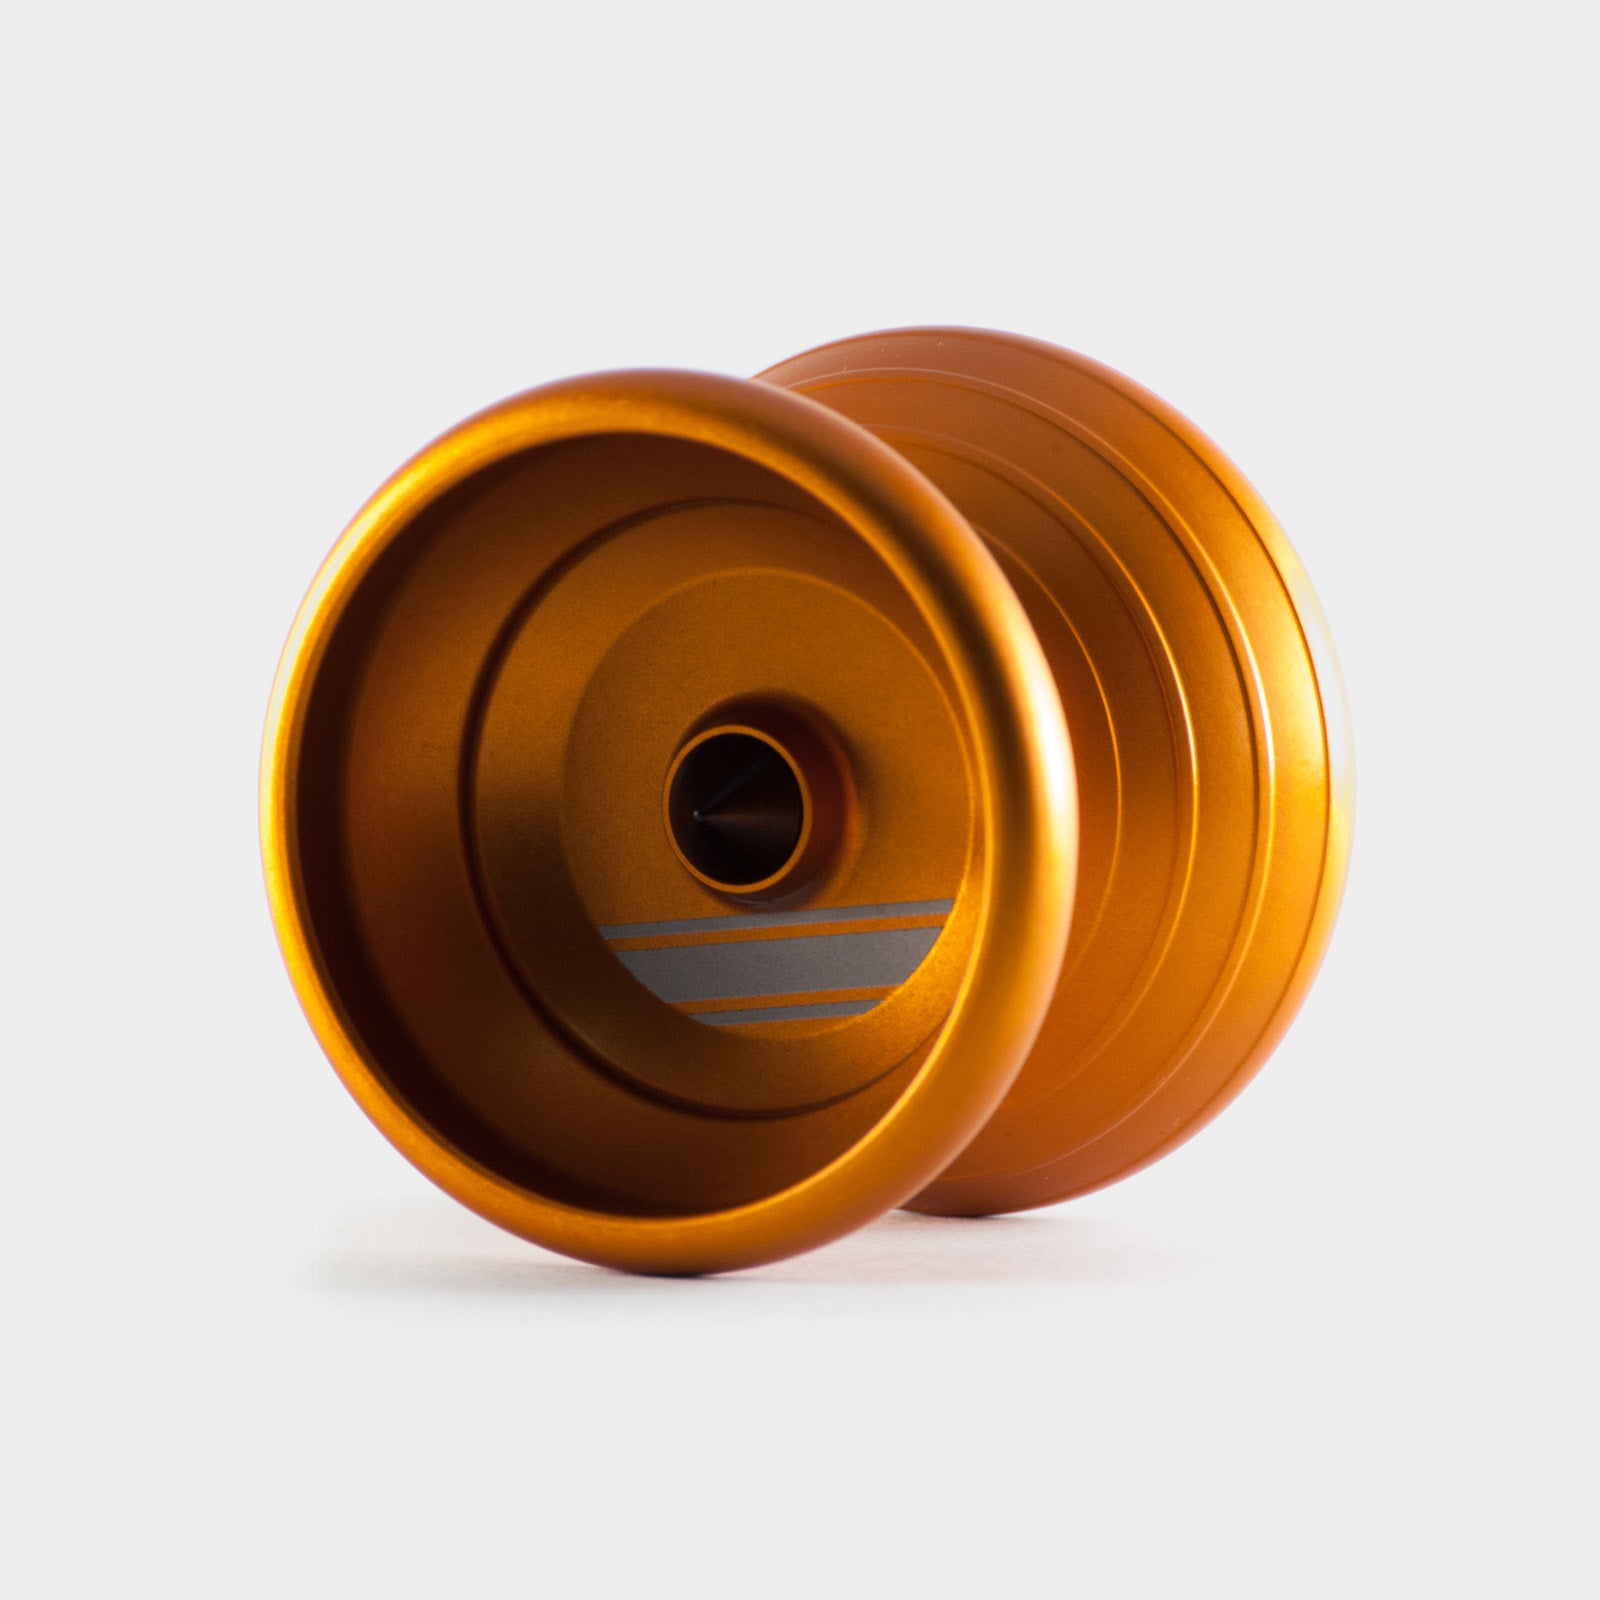 DownBeat yo-yo by One Drop YoYos – Store – Spinkult